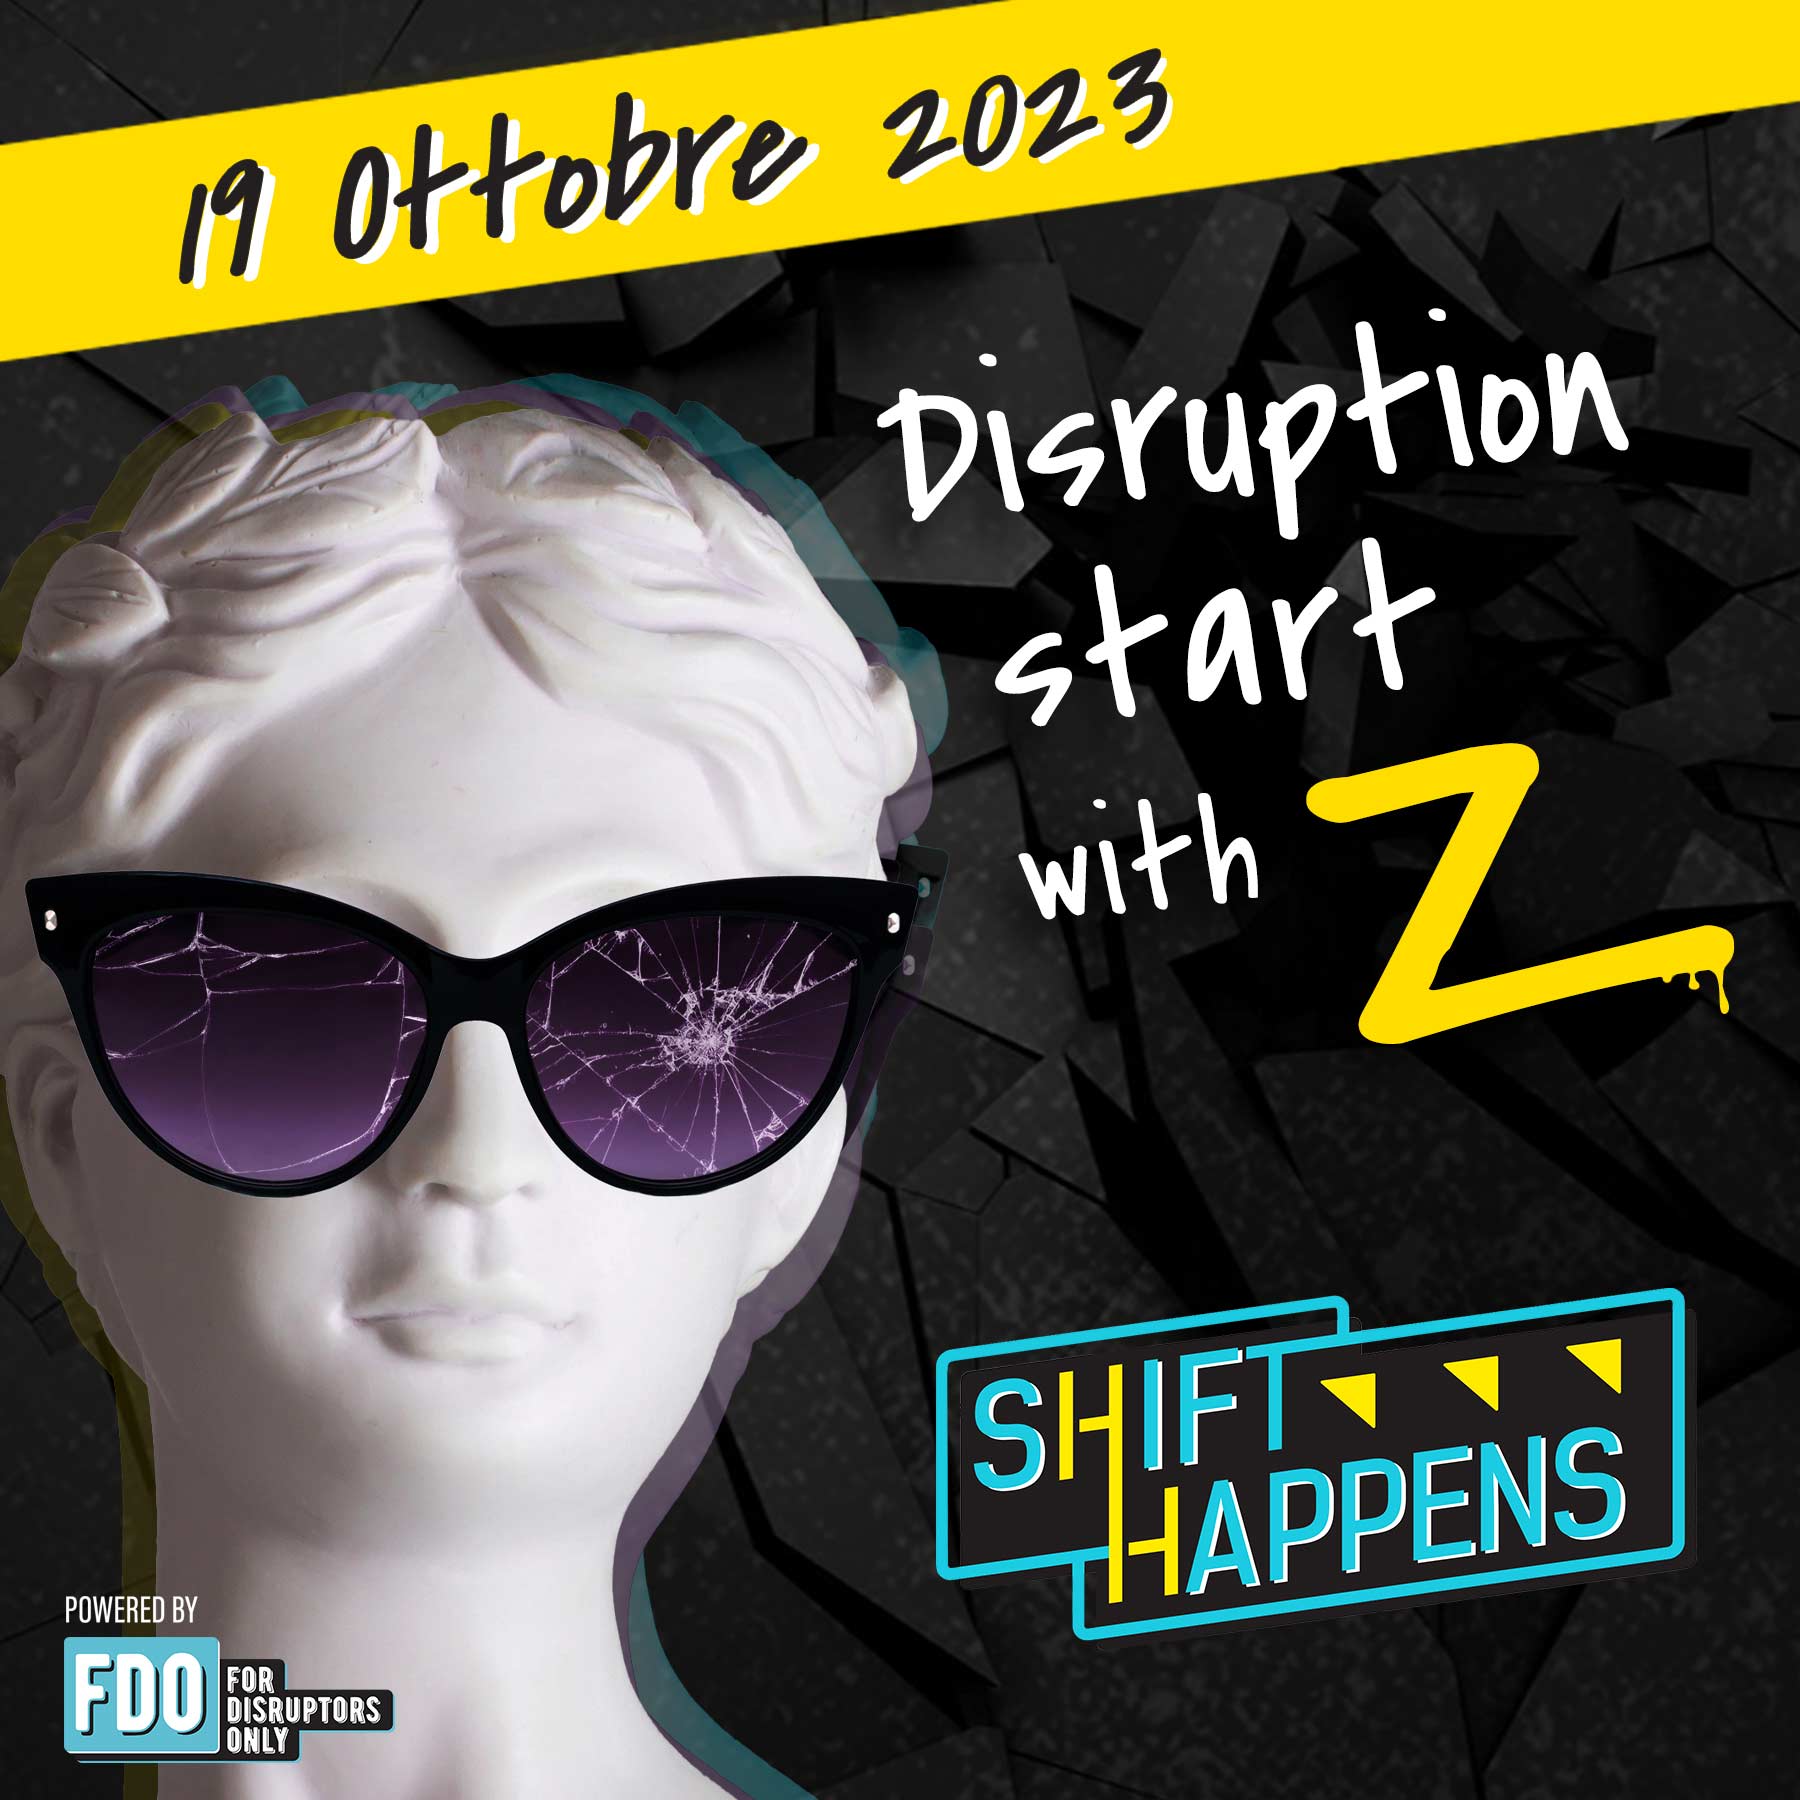 Shift Happens: disruption start with Z Casa xiaomi, Milano